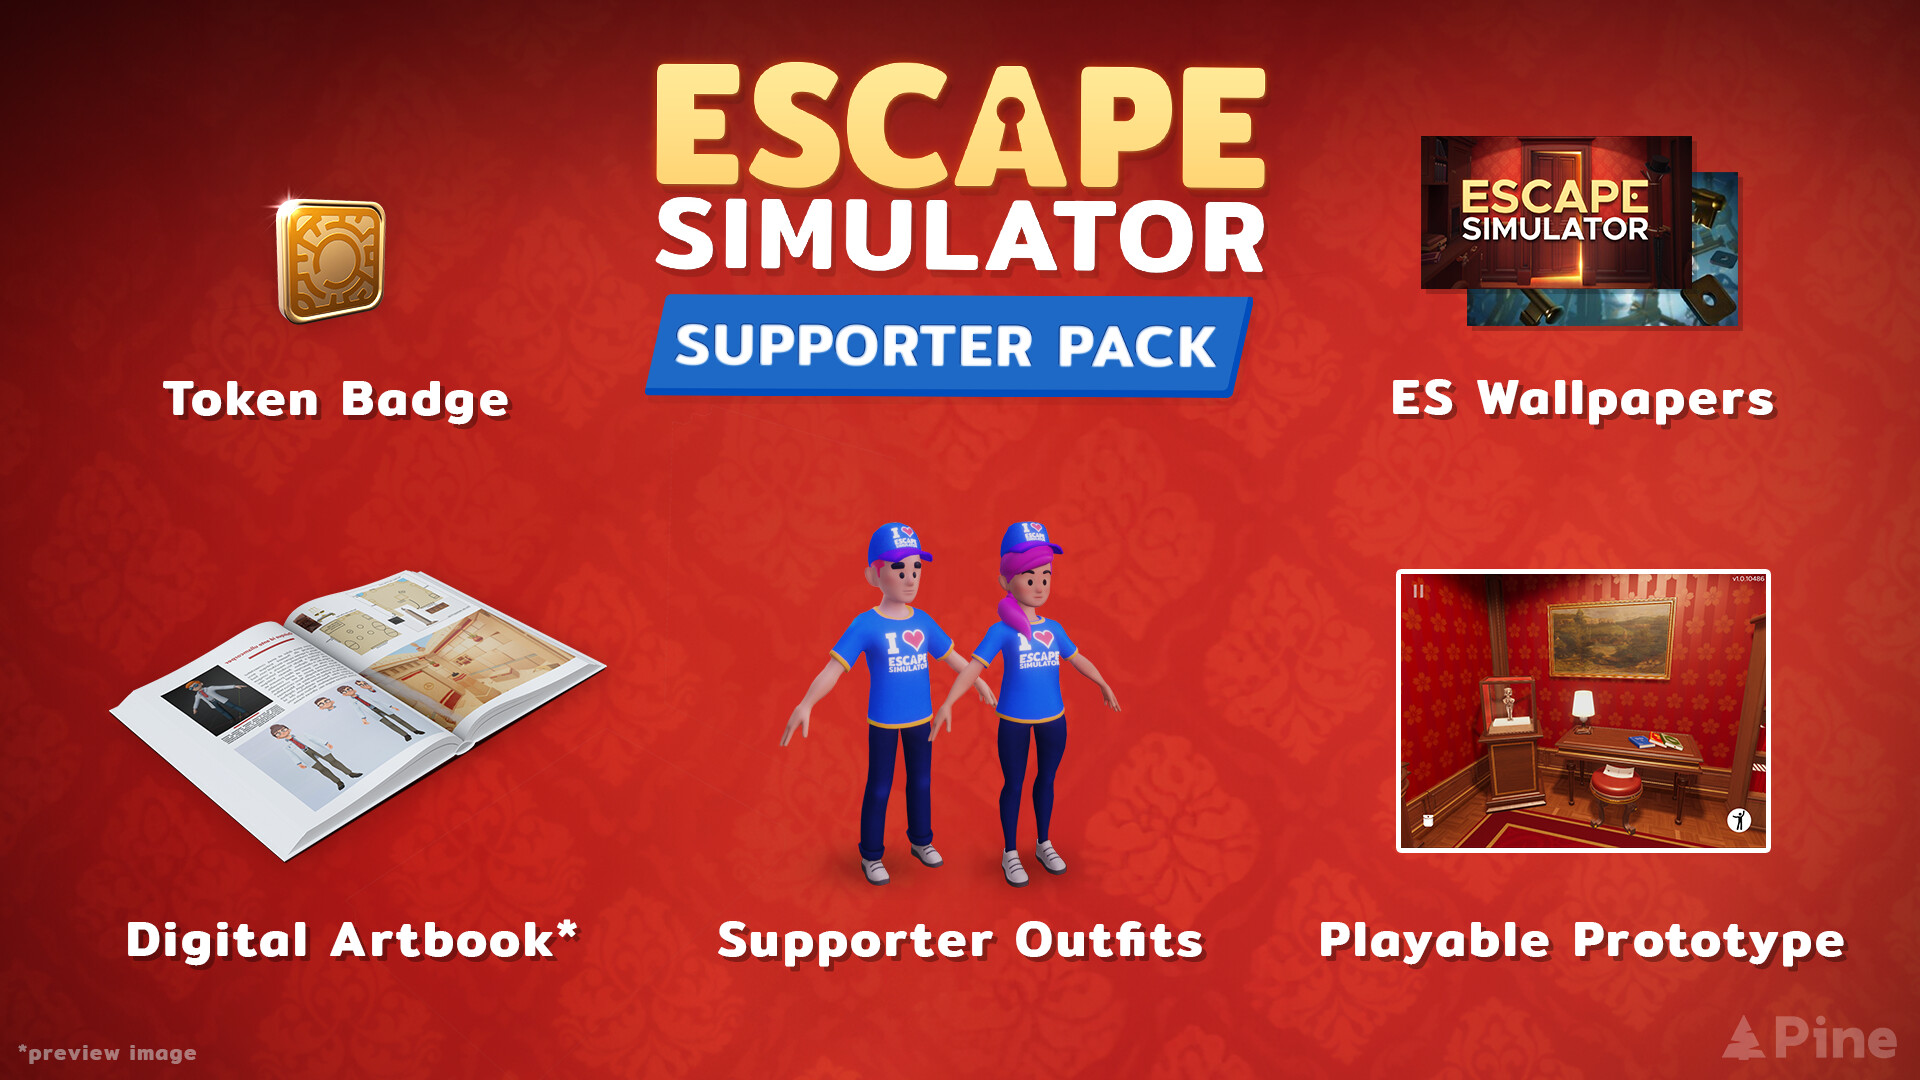 Escape Simulator: Supporter Pack DLC Featured Screenshot #1